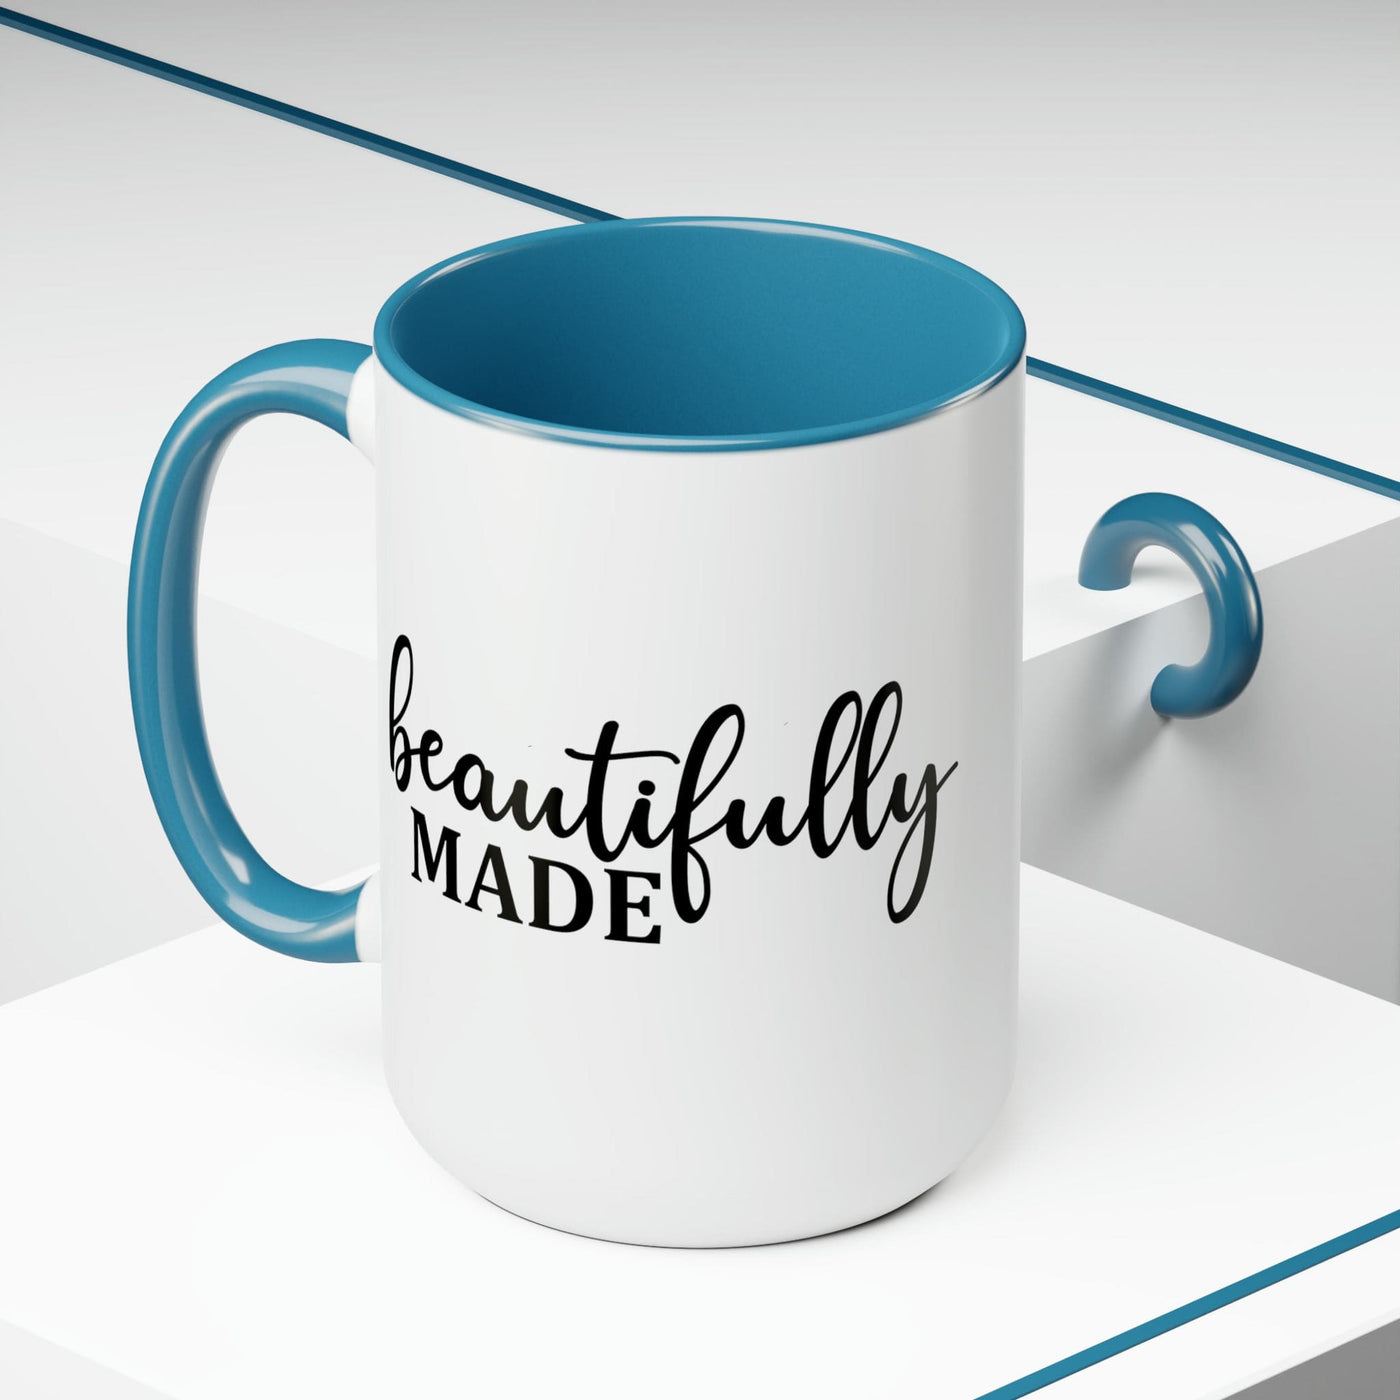 Accent Ceramic Coffee Mug 15oz - Beautifully Made - Inspiration Affirmation